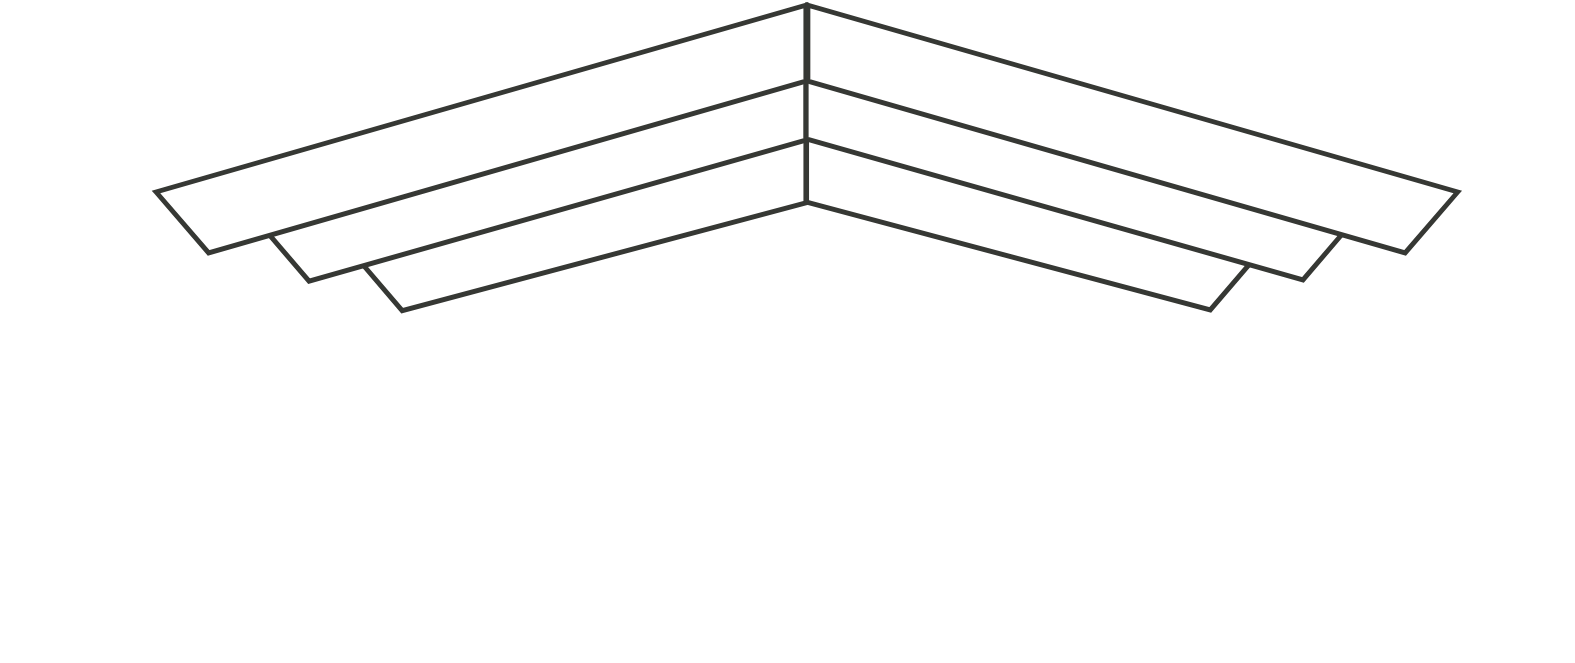 Cabana Target Drawdown Logo groß für dunkle Hintergründe (transparentes PNG)